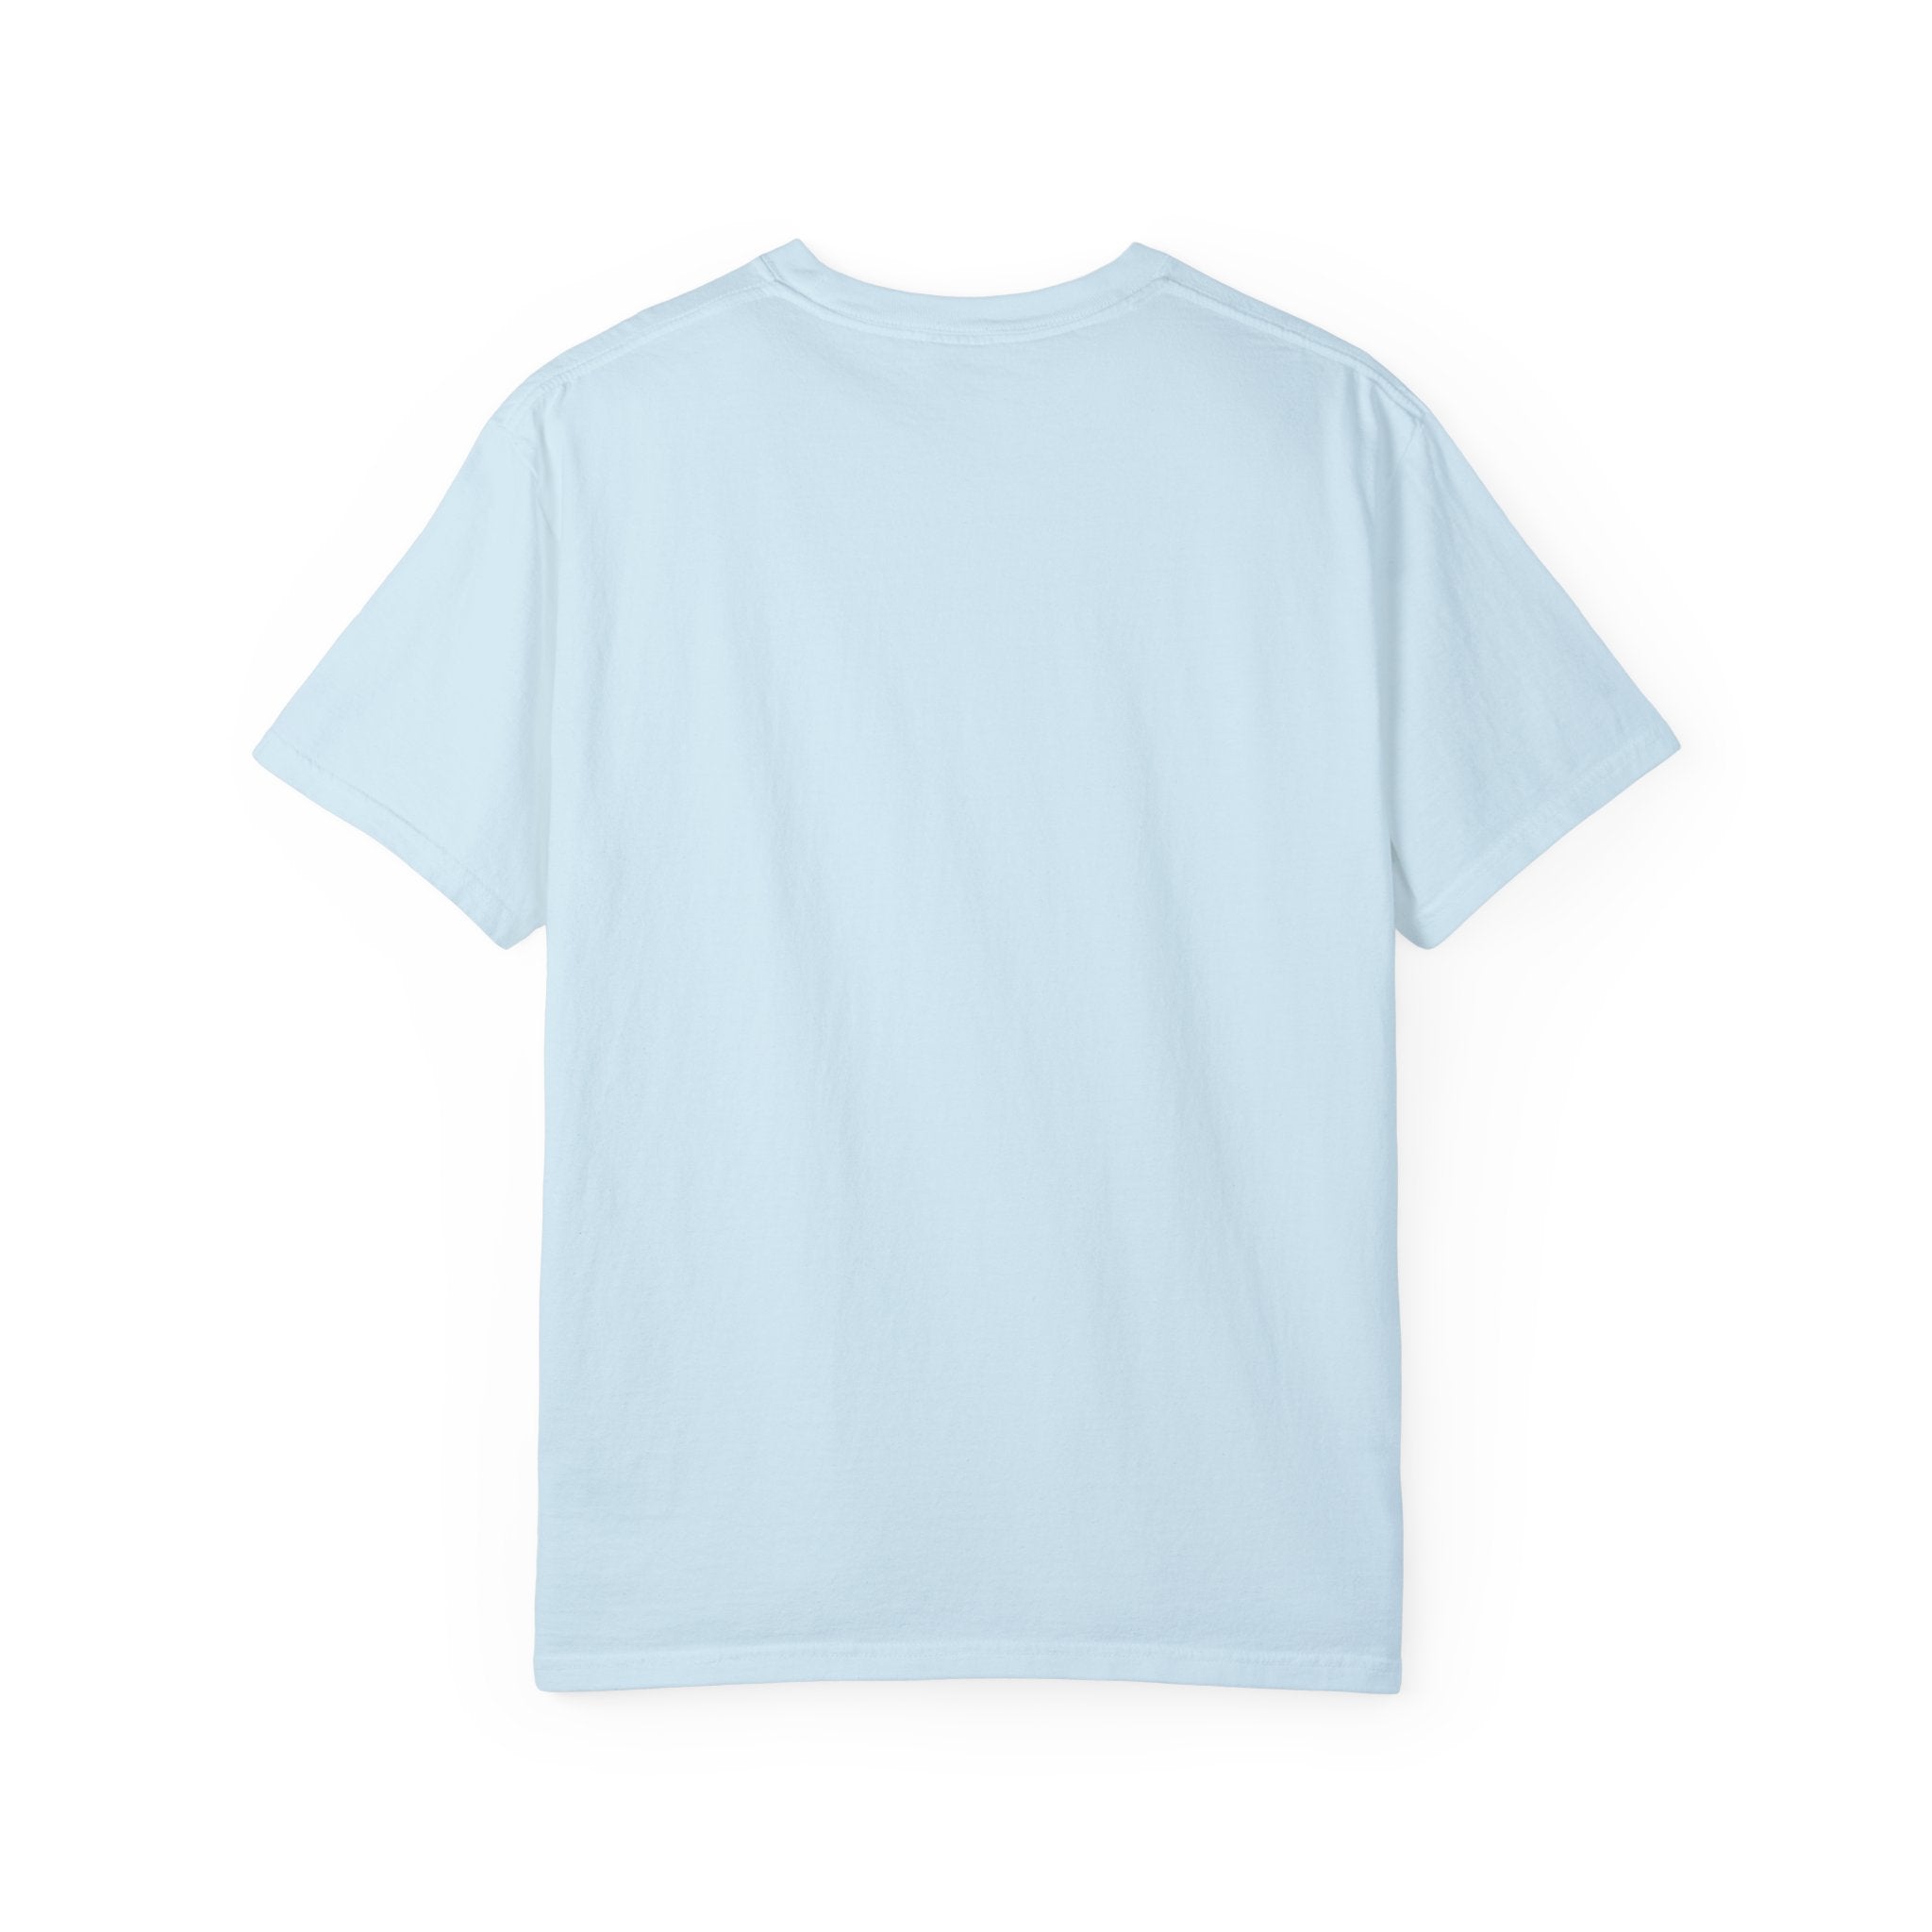 Love Wins All Unisex Garment-Dyed T-shirt